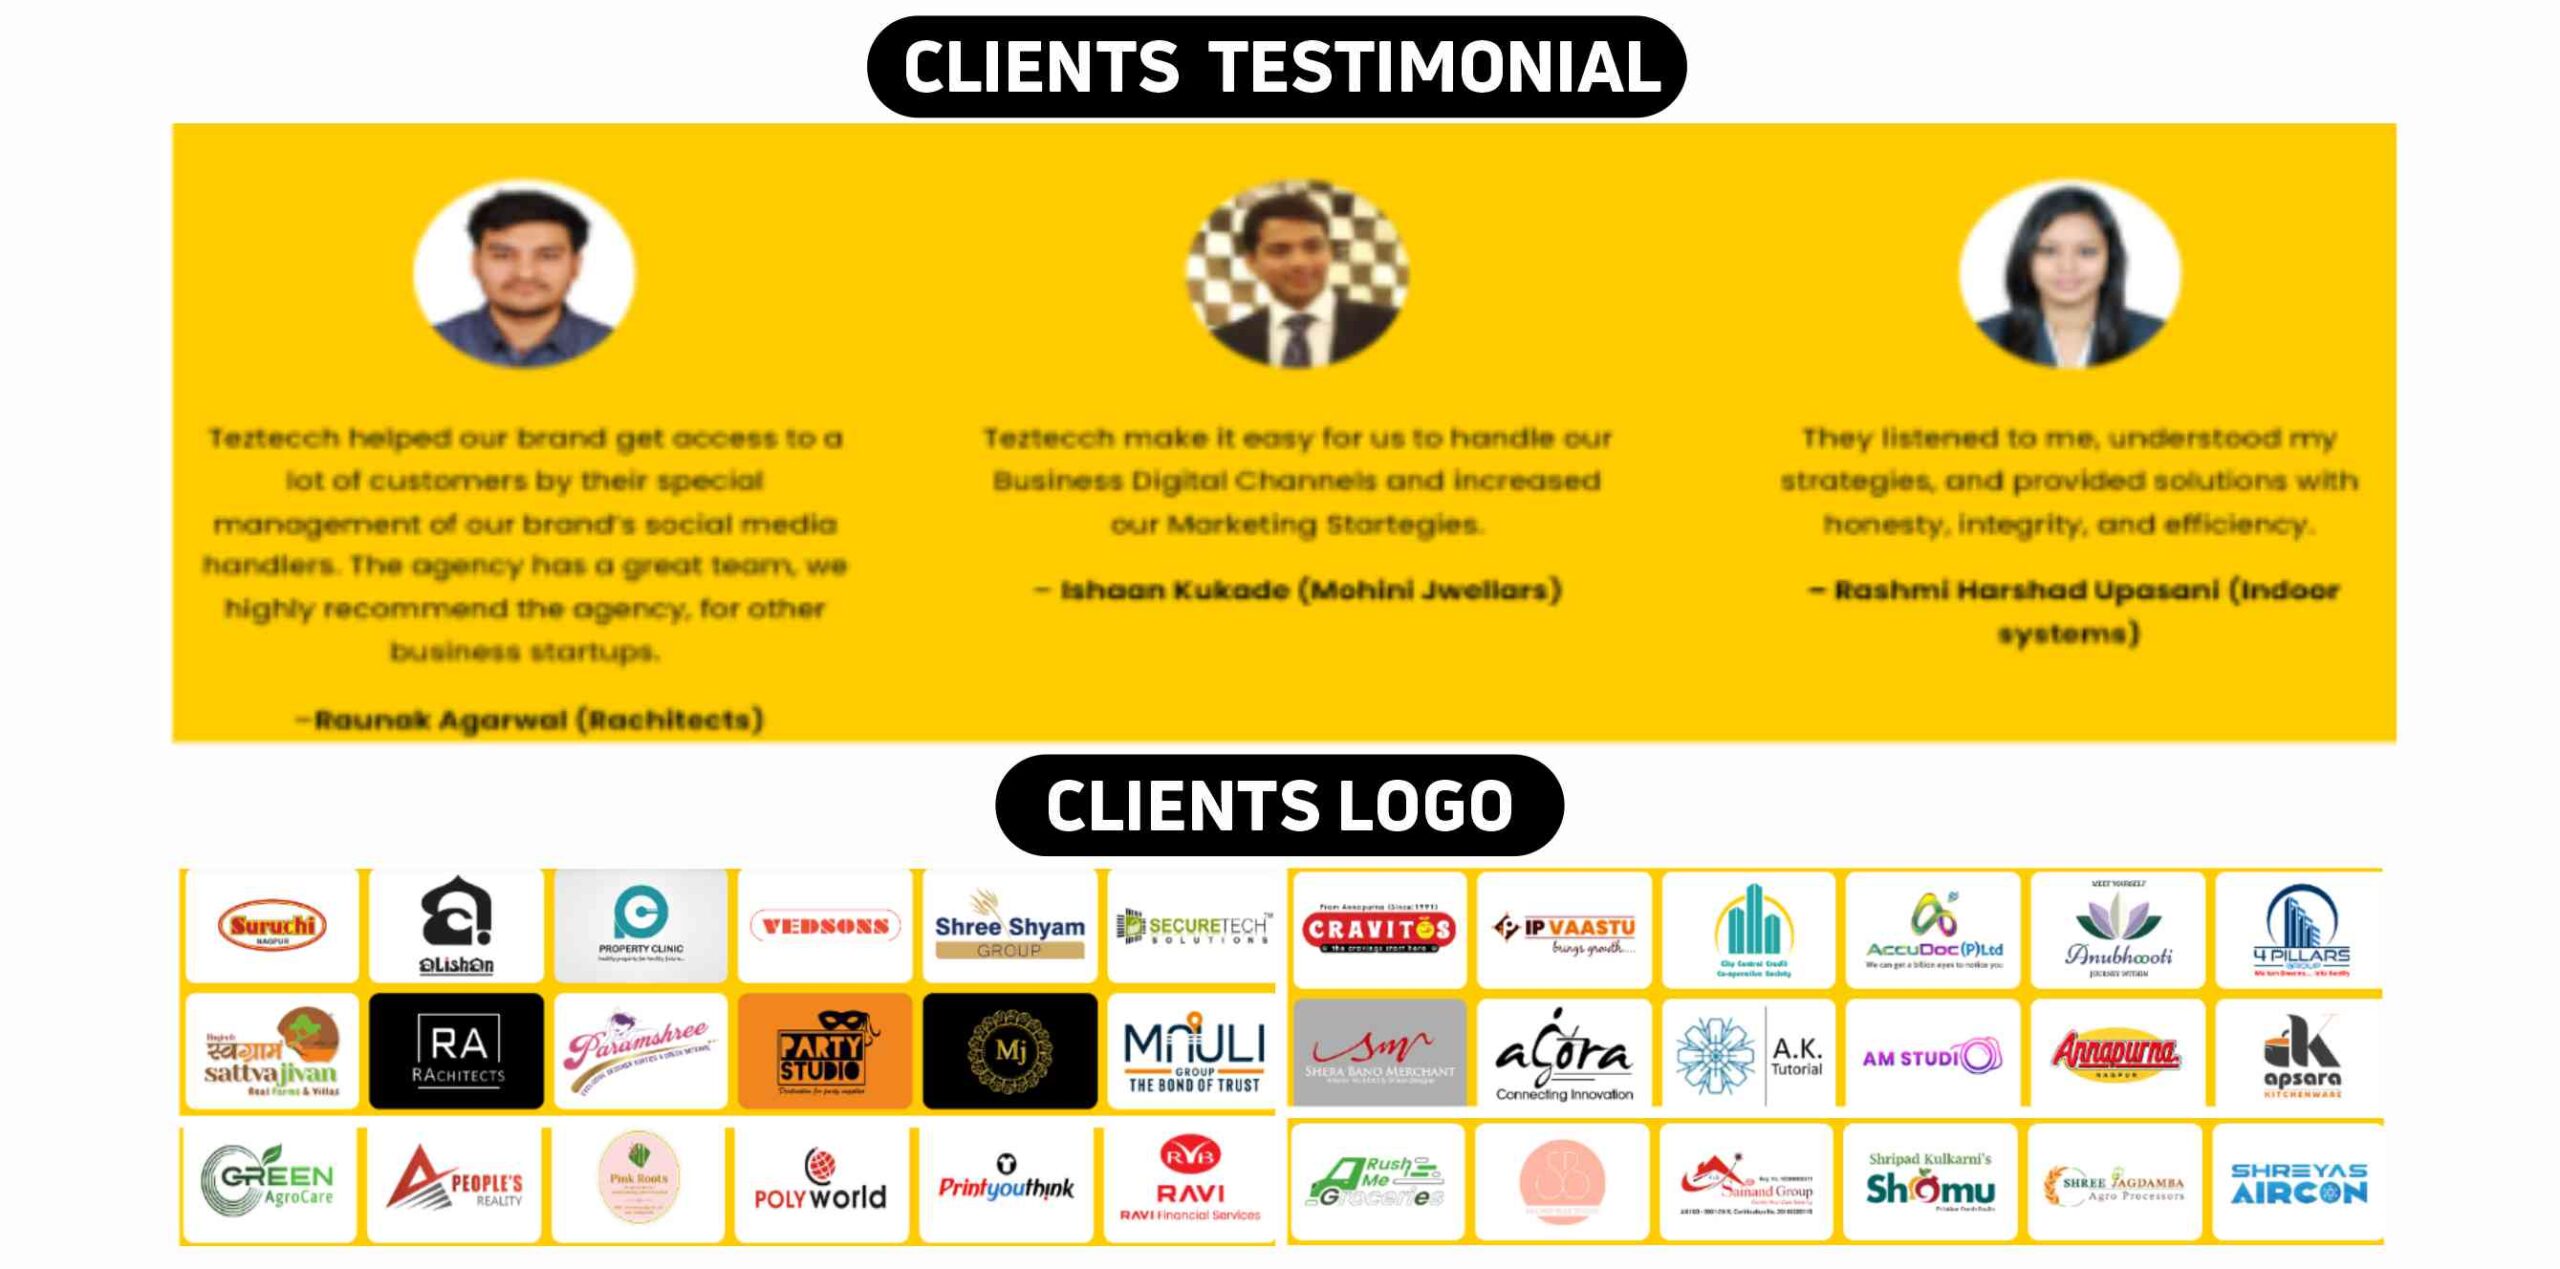 Teztecch Client Testimonial & Logos